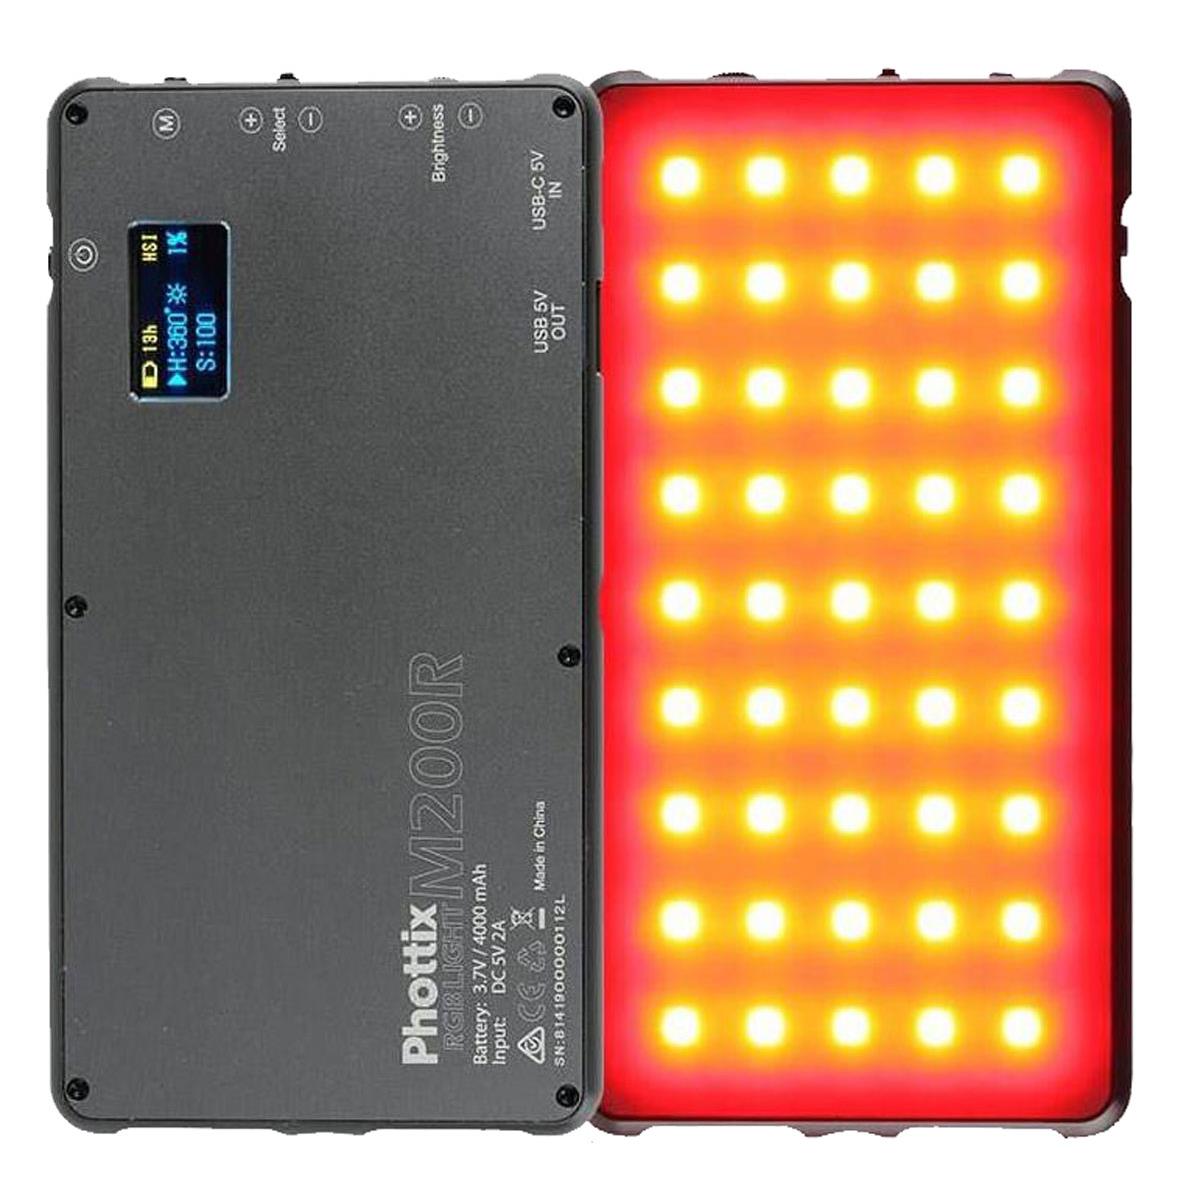 Photos - Studio Lighting Phottix M200R LED RGB Light with Effects for Mobile Phones PH81419 